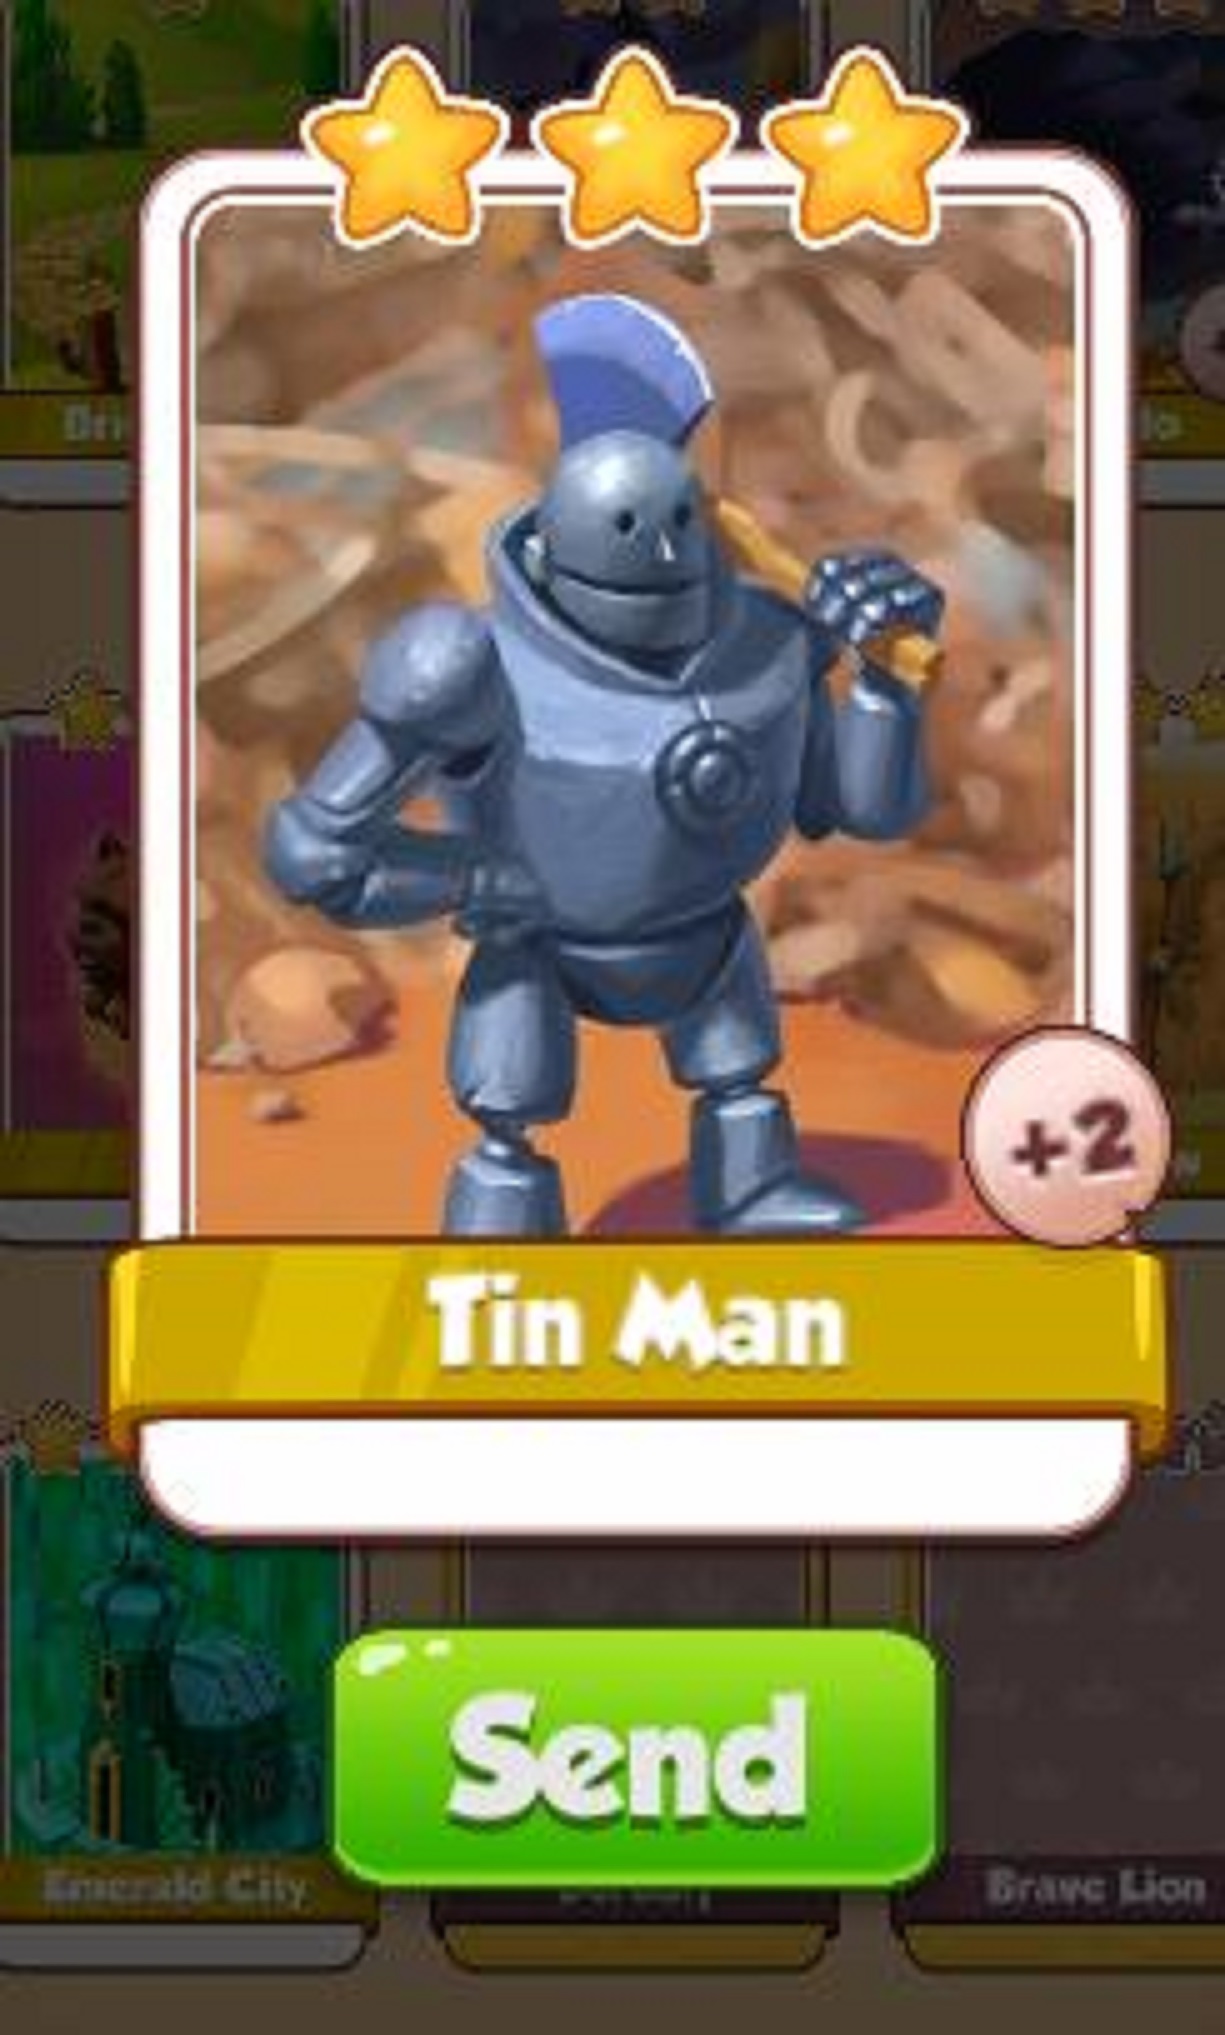 Tin Man Card - Oz Set - from Coin Master Cards